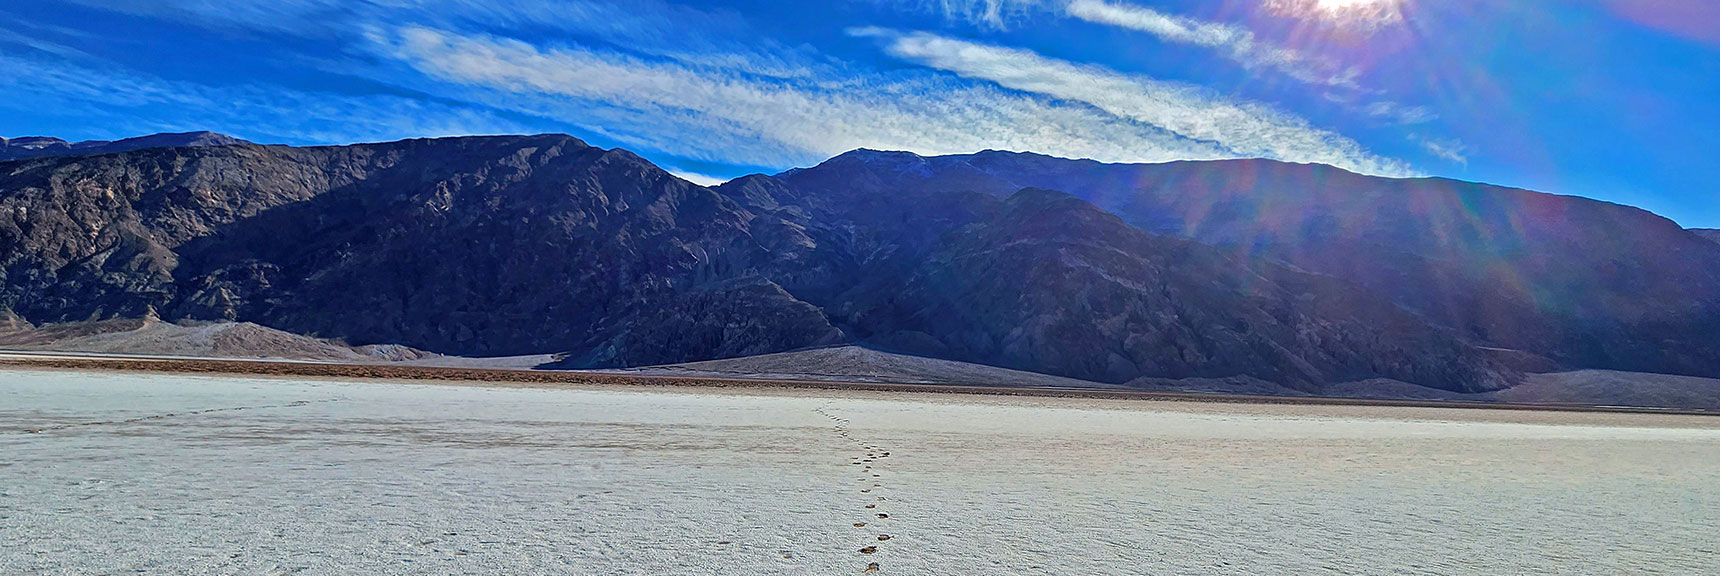 Footsteps Mark Direction Toward Dante's View on Rim of Black Mountains. | Death Valley Crossing | Death Valley National Park, California | David Smith | LasVegasAreaTrails.com